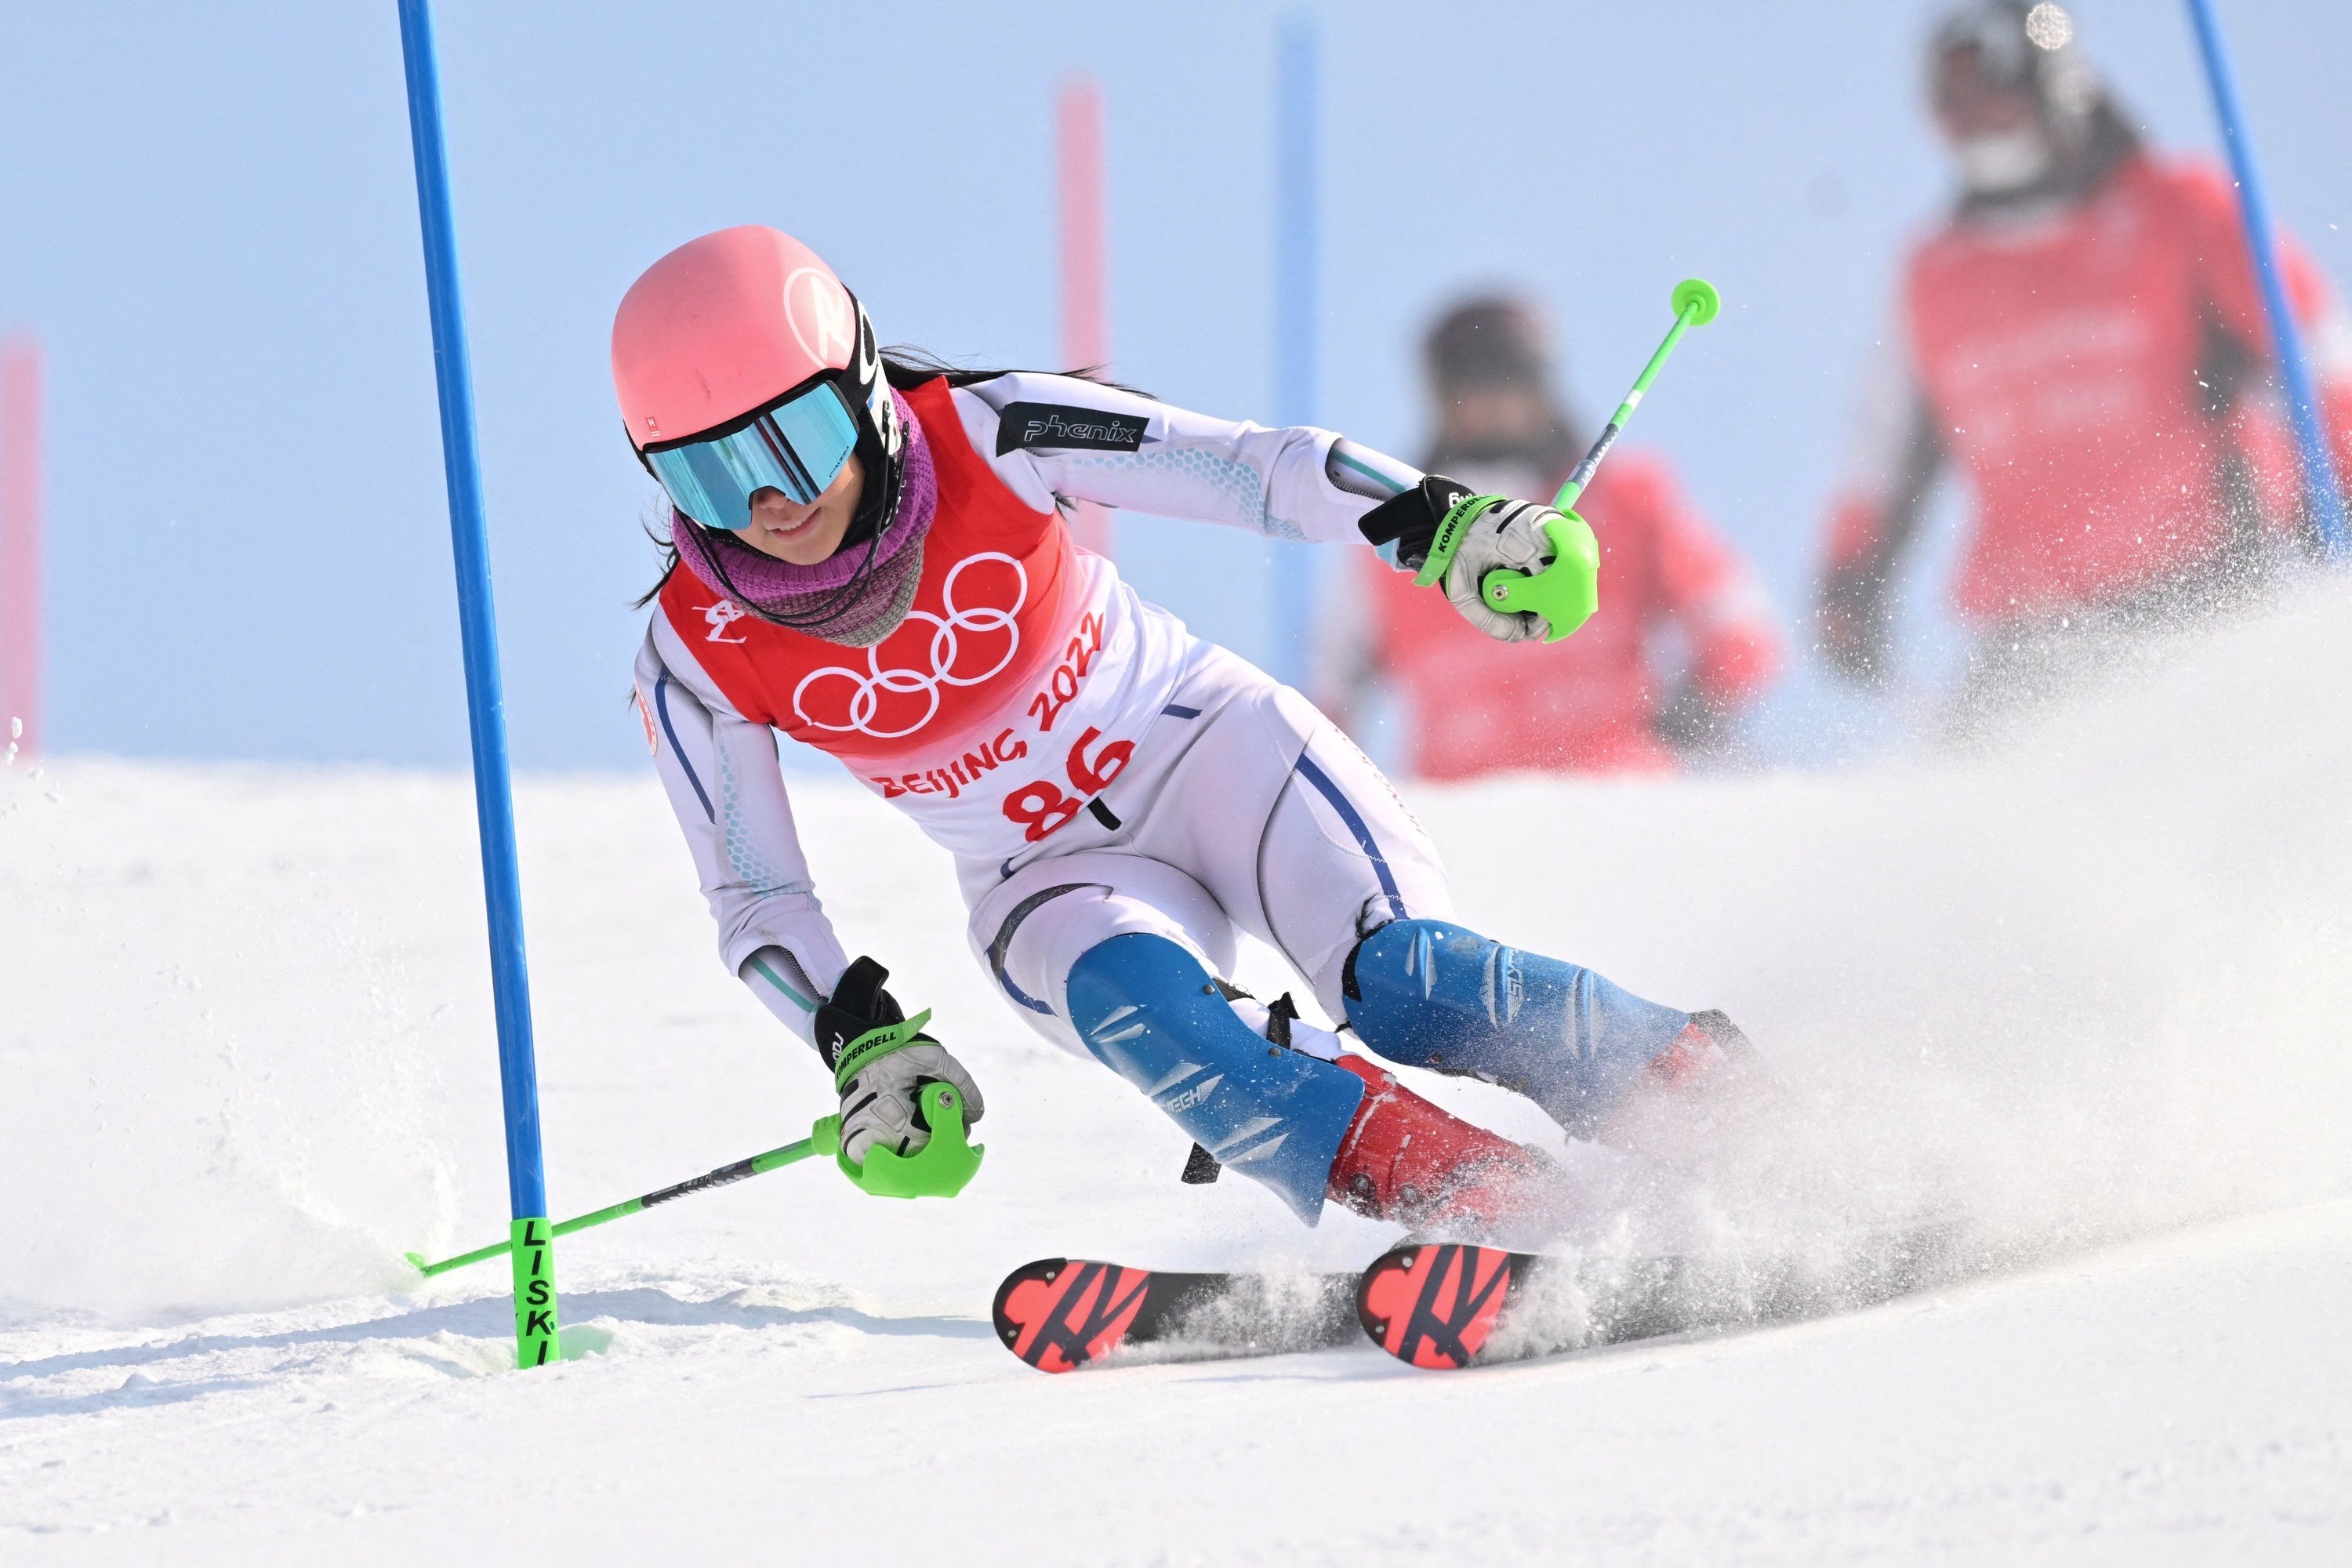 An athlete skiing down a mountain